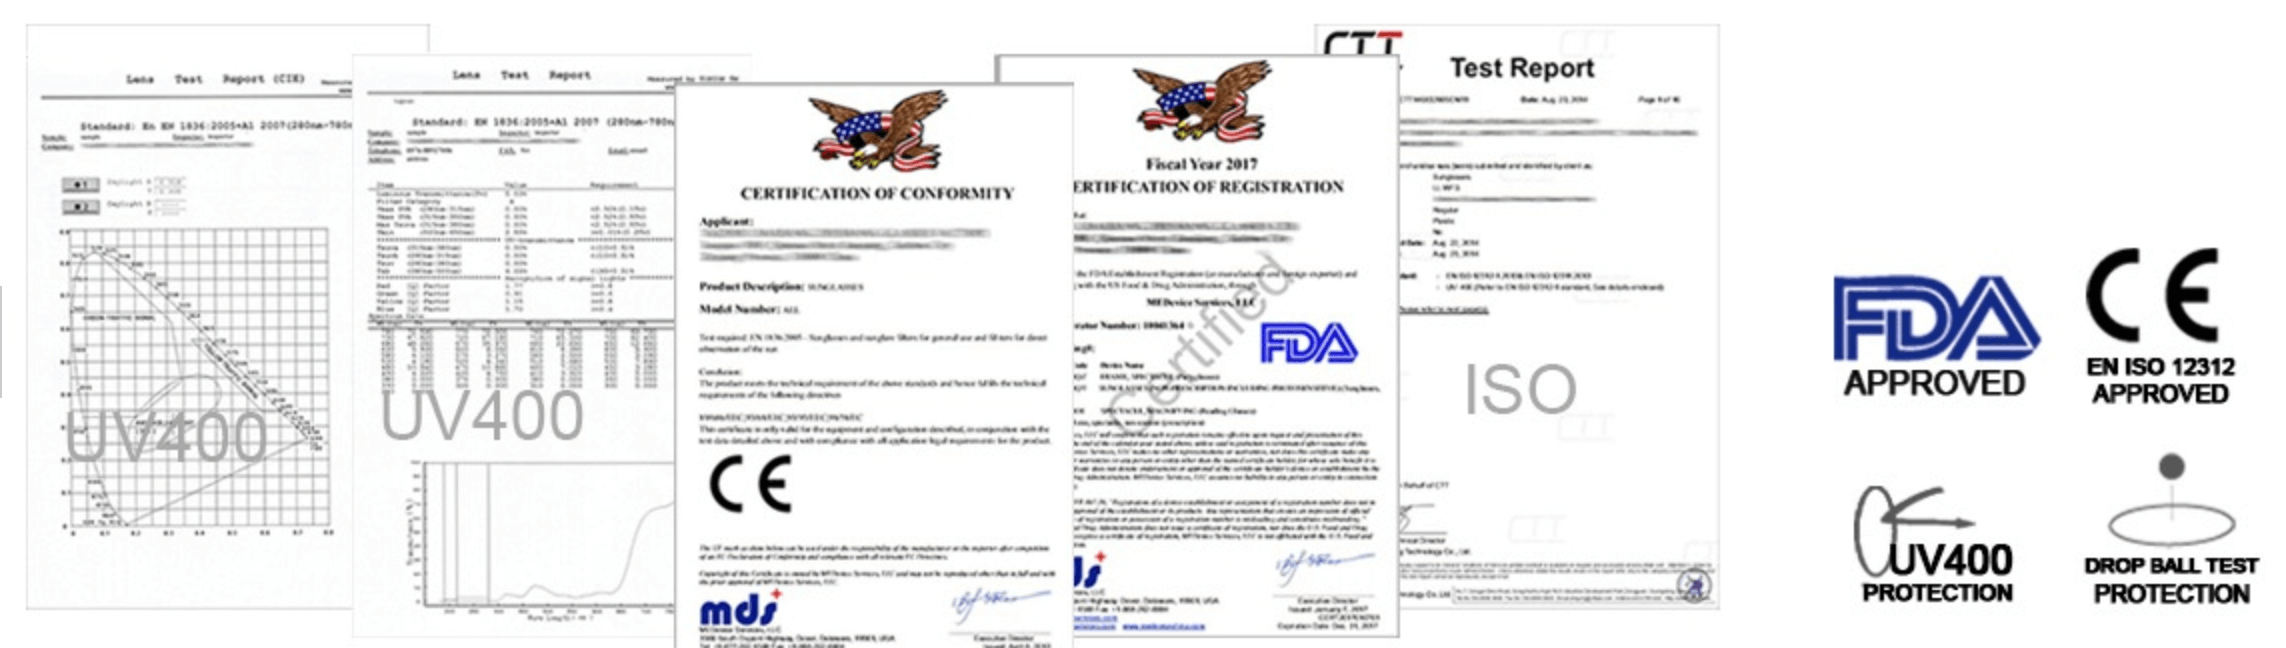 CE FDA UV400 certificates_China Sunglasses Manufacturer